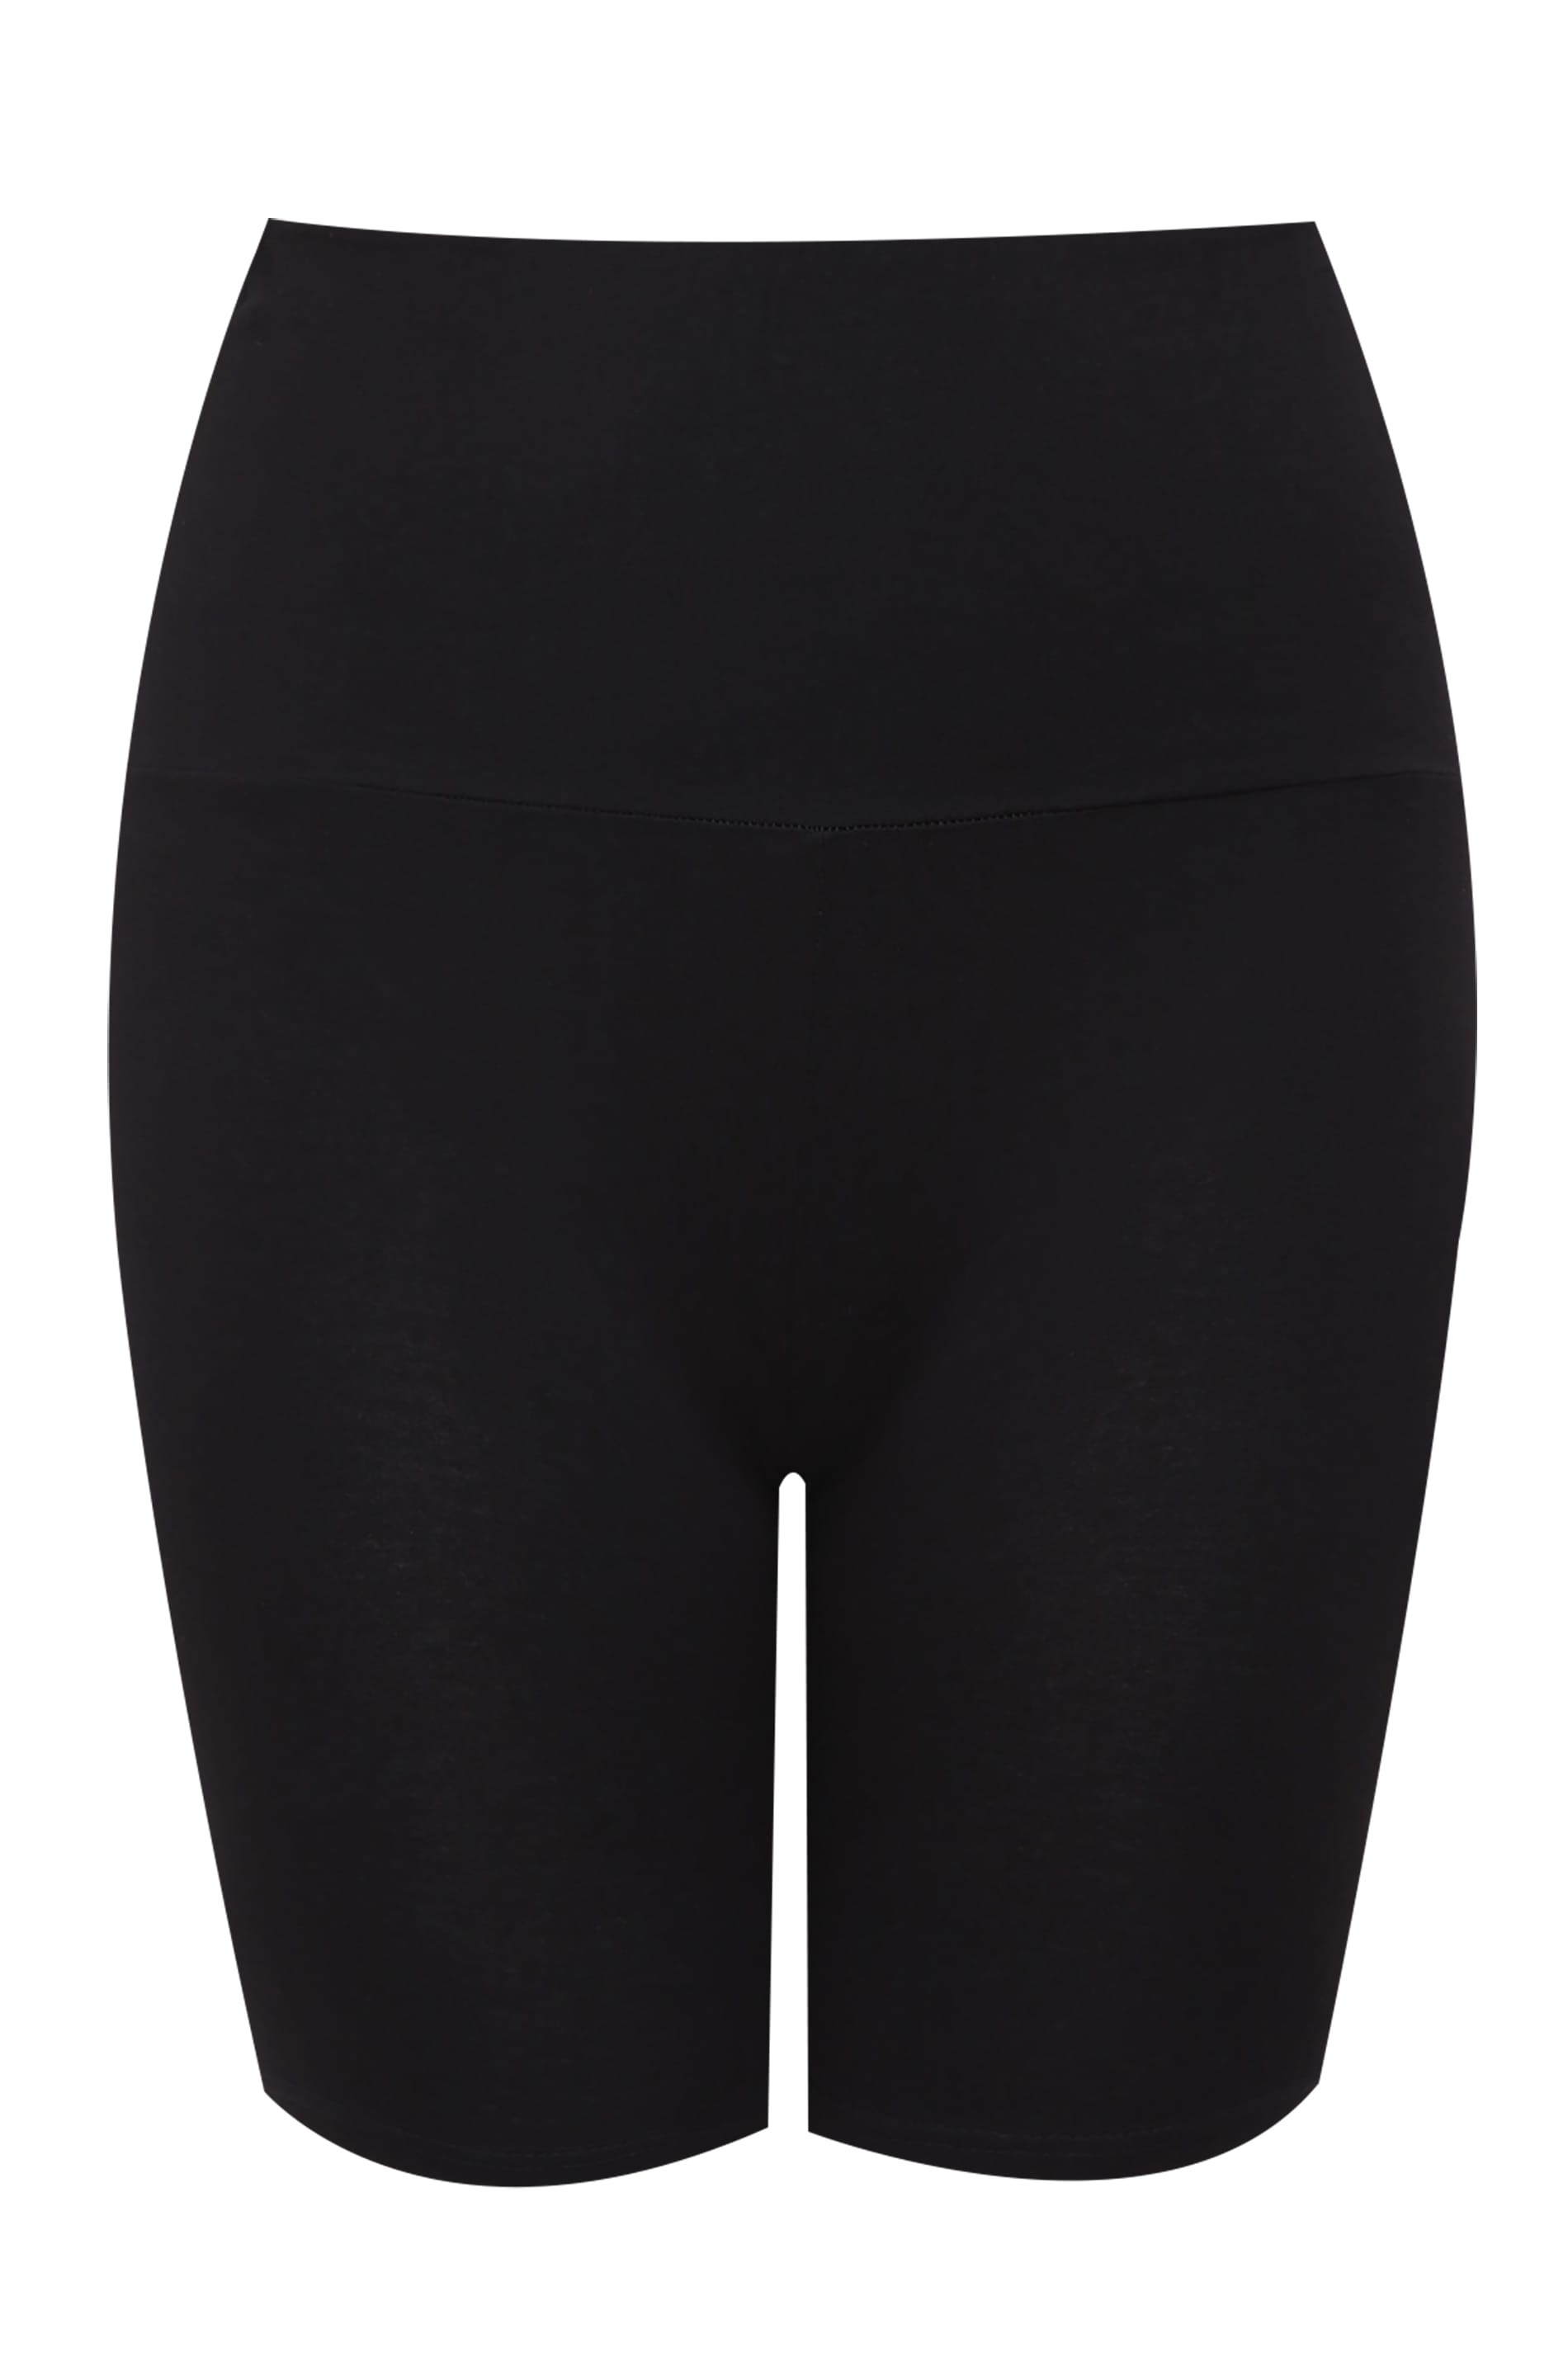 Black TUMMY CONTROL Soft Touch Legging Shorts, Plus Size 14 to 32